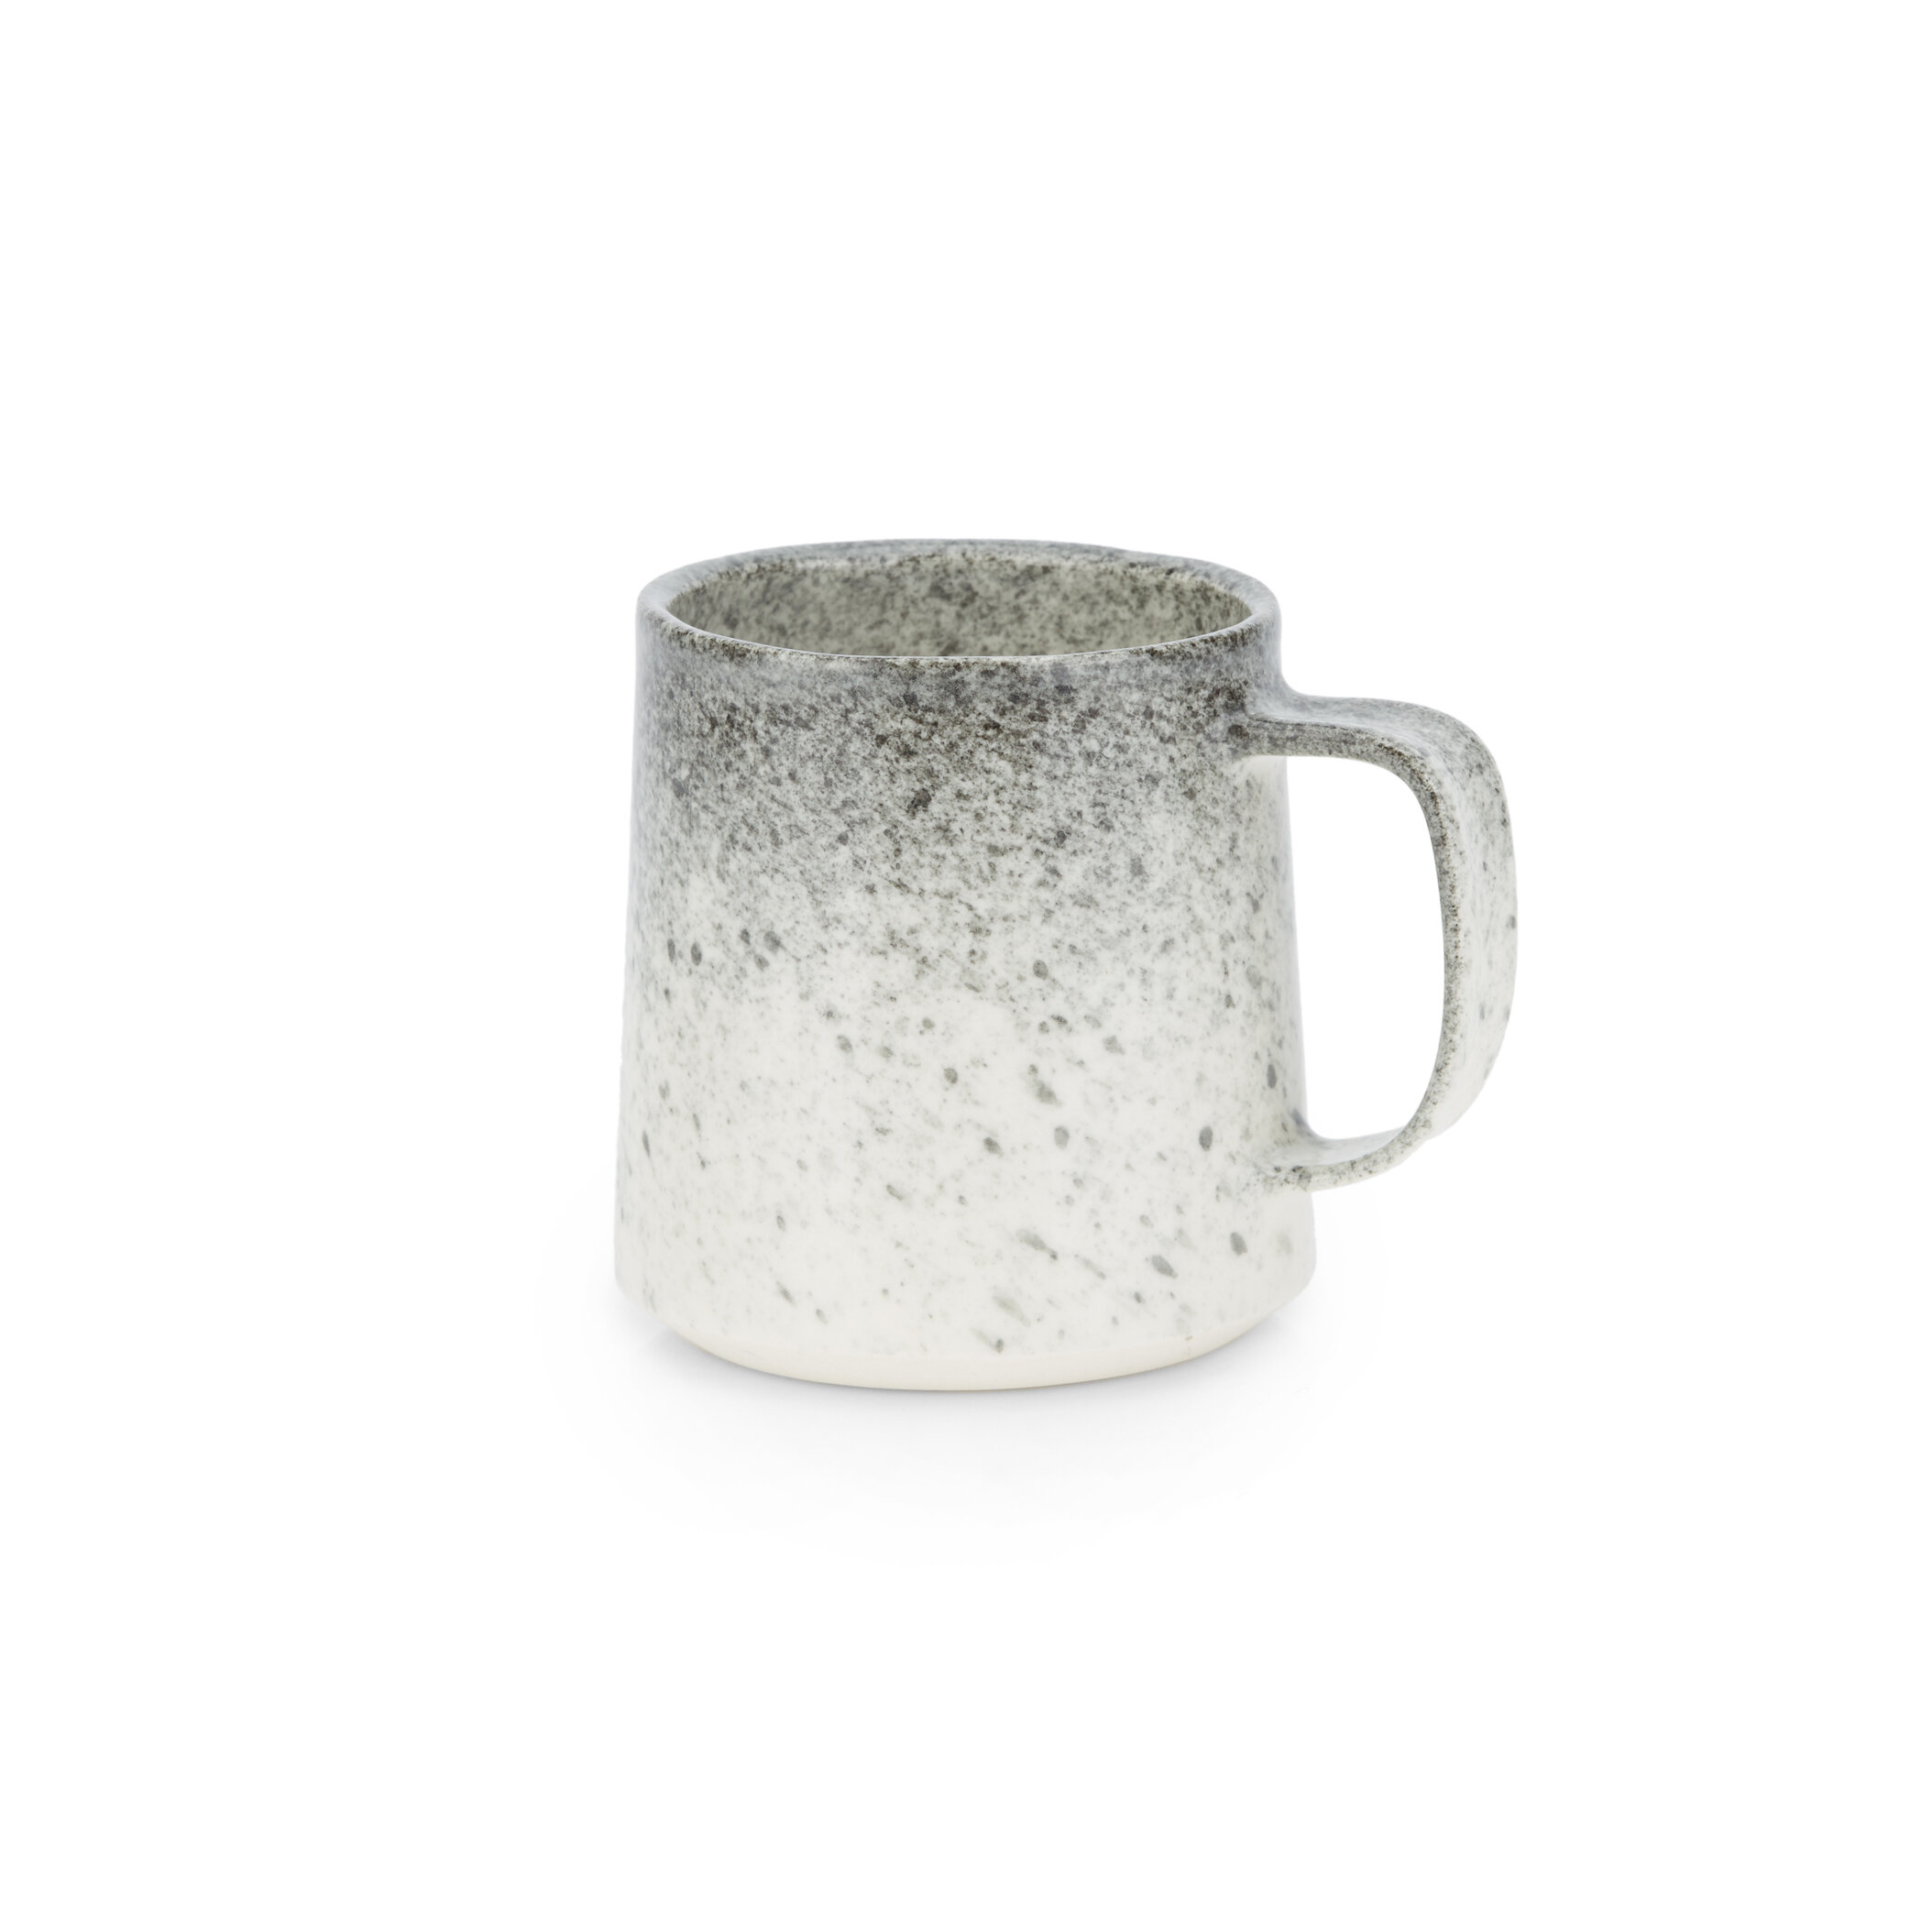 on-white-ceramic-mug-photo-example.JPG